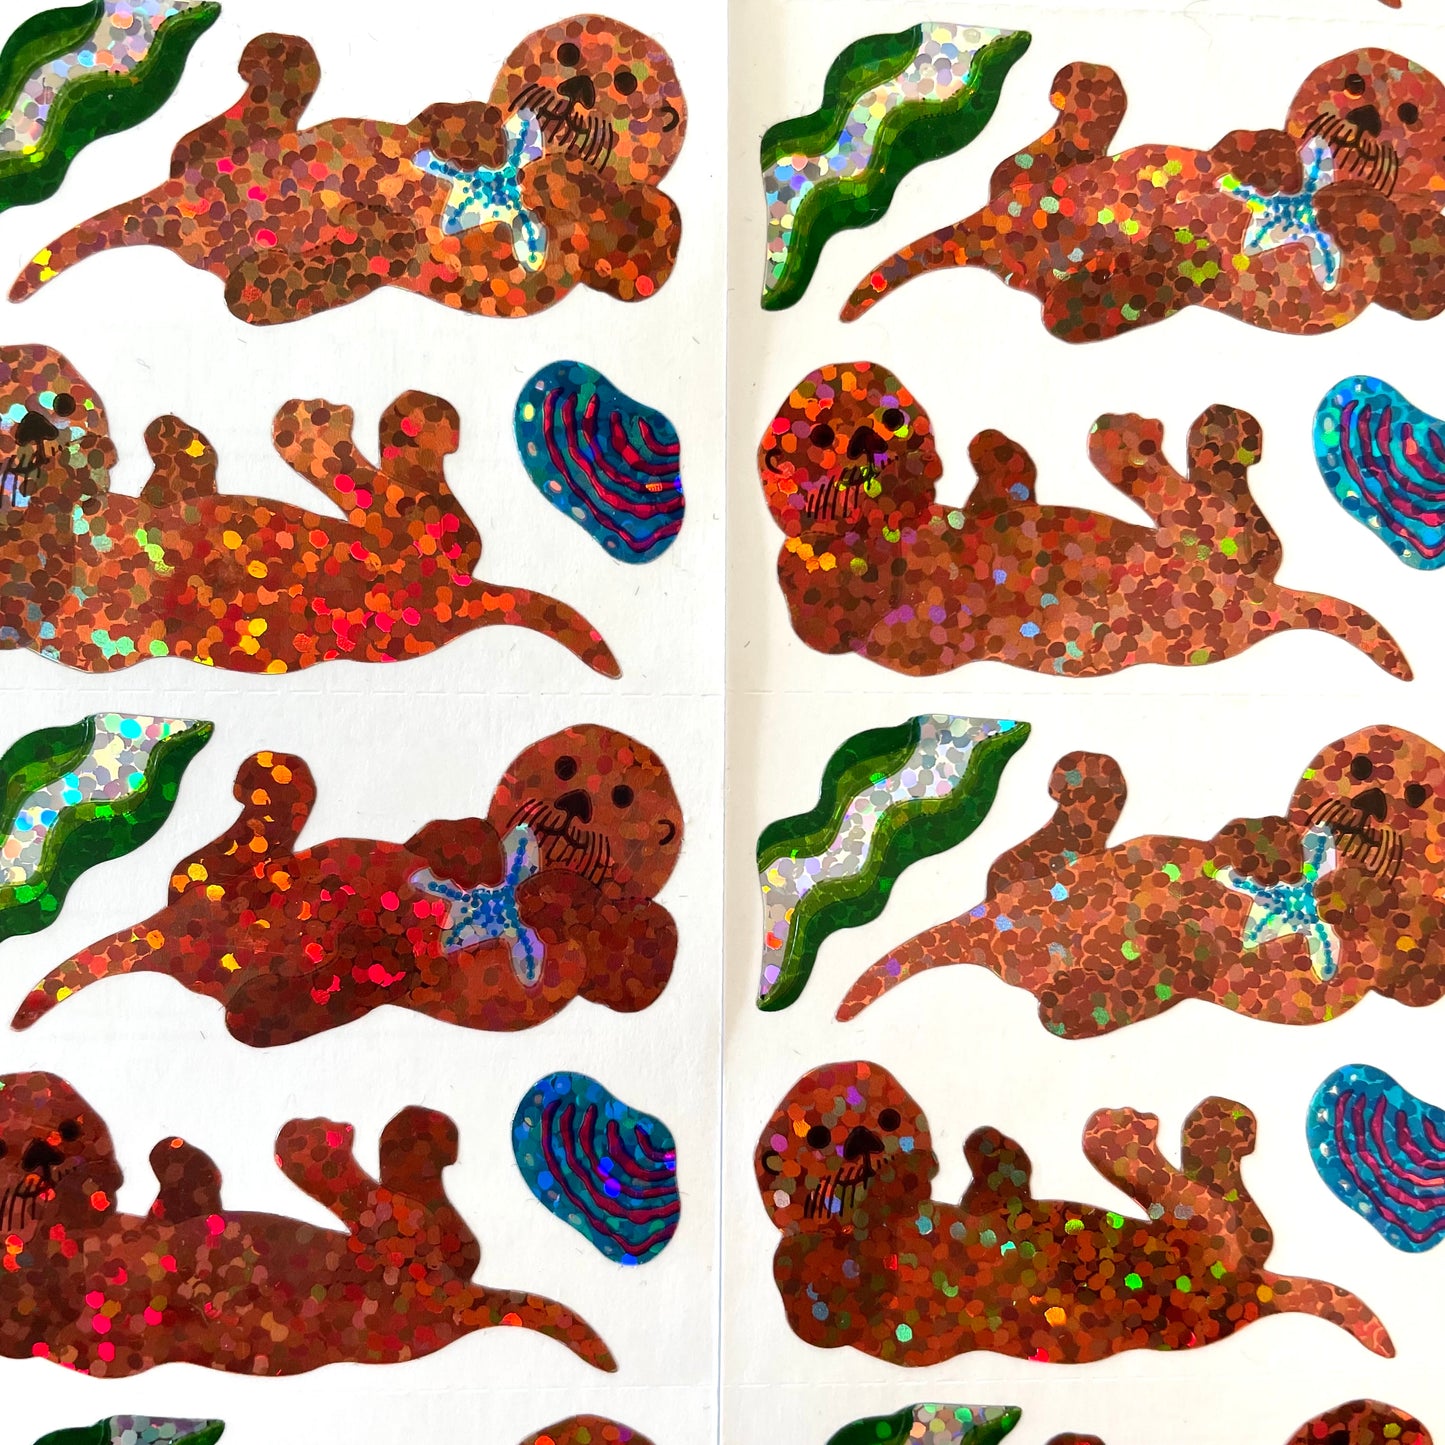 HAMBLY: Sea Otter glitter stickers